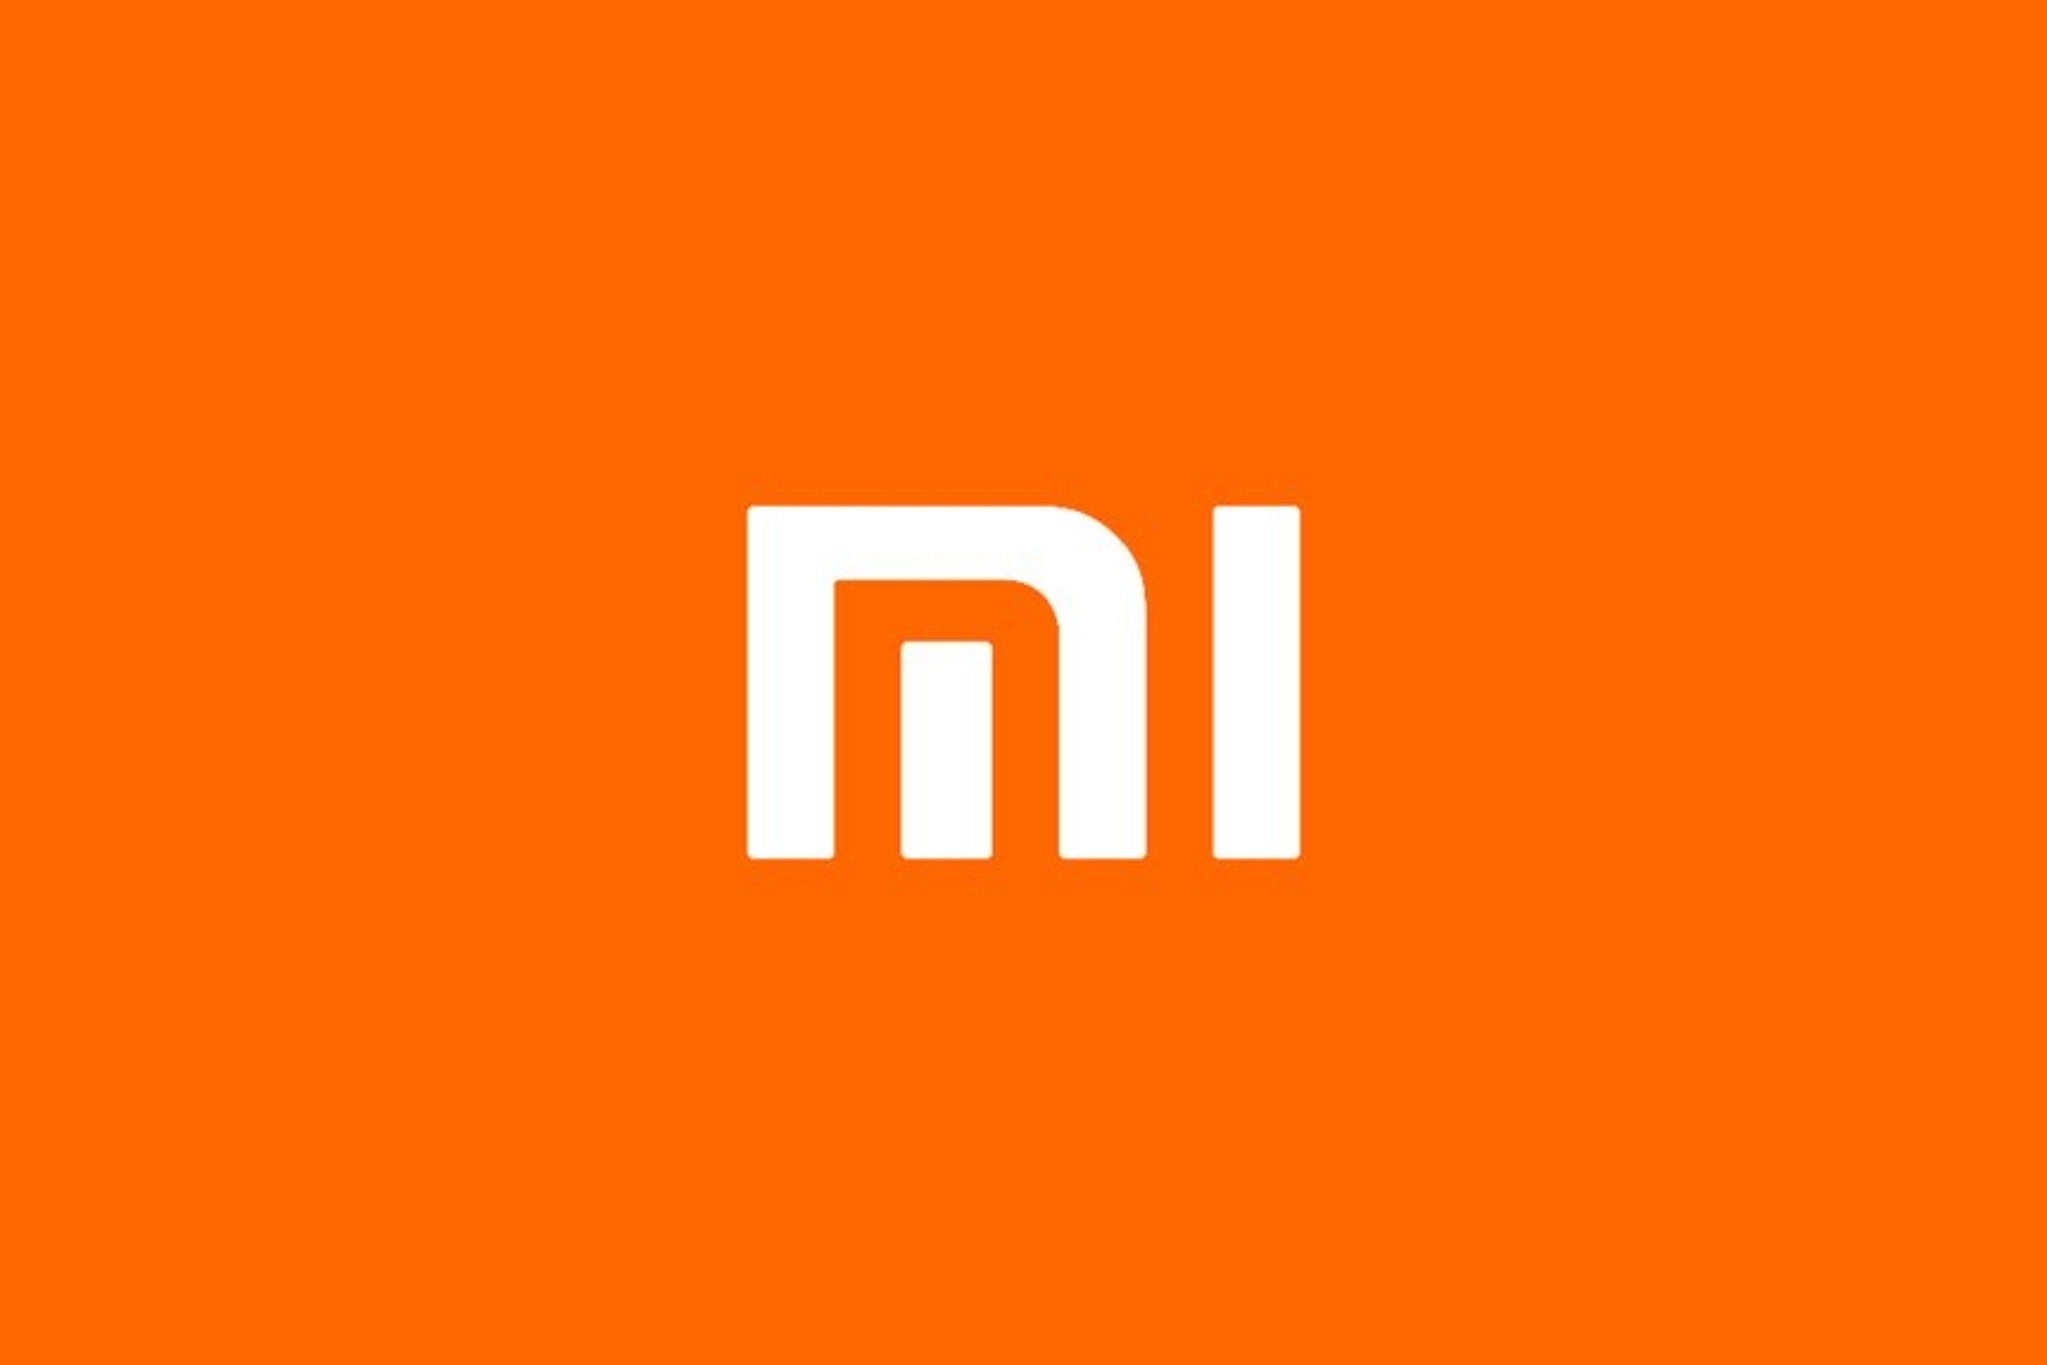 Xiaomi Logo (xiaomi / via twitter)